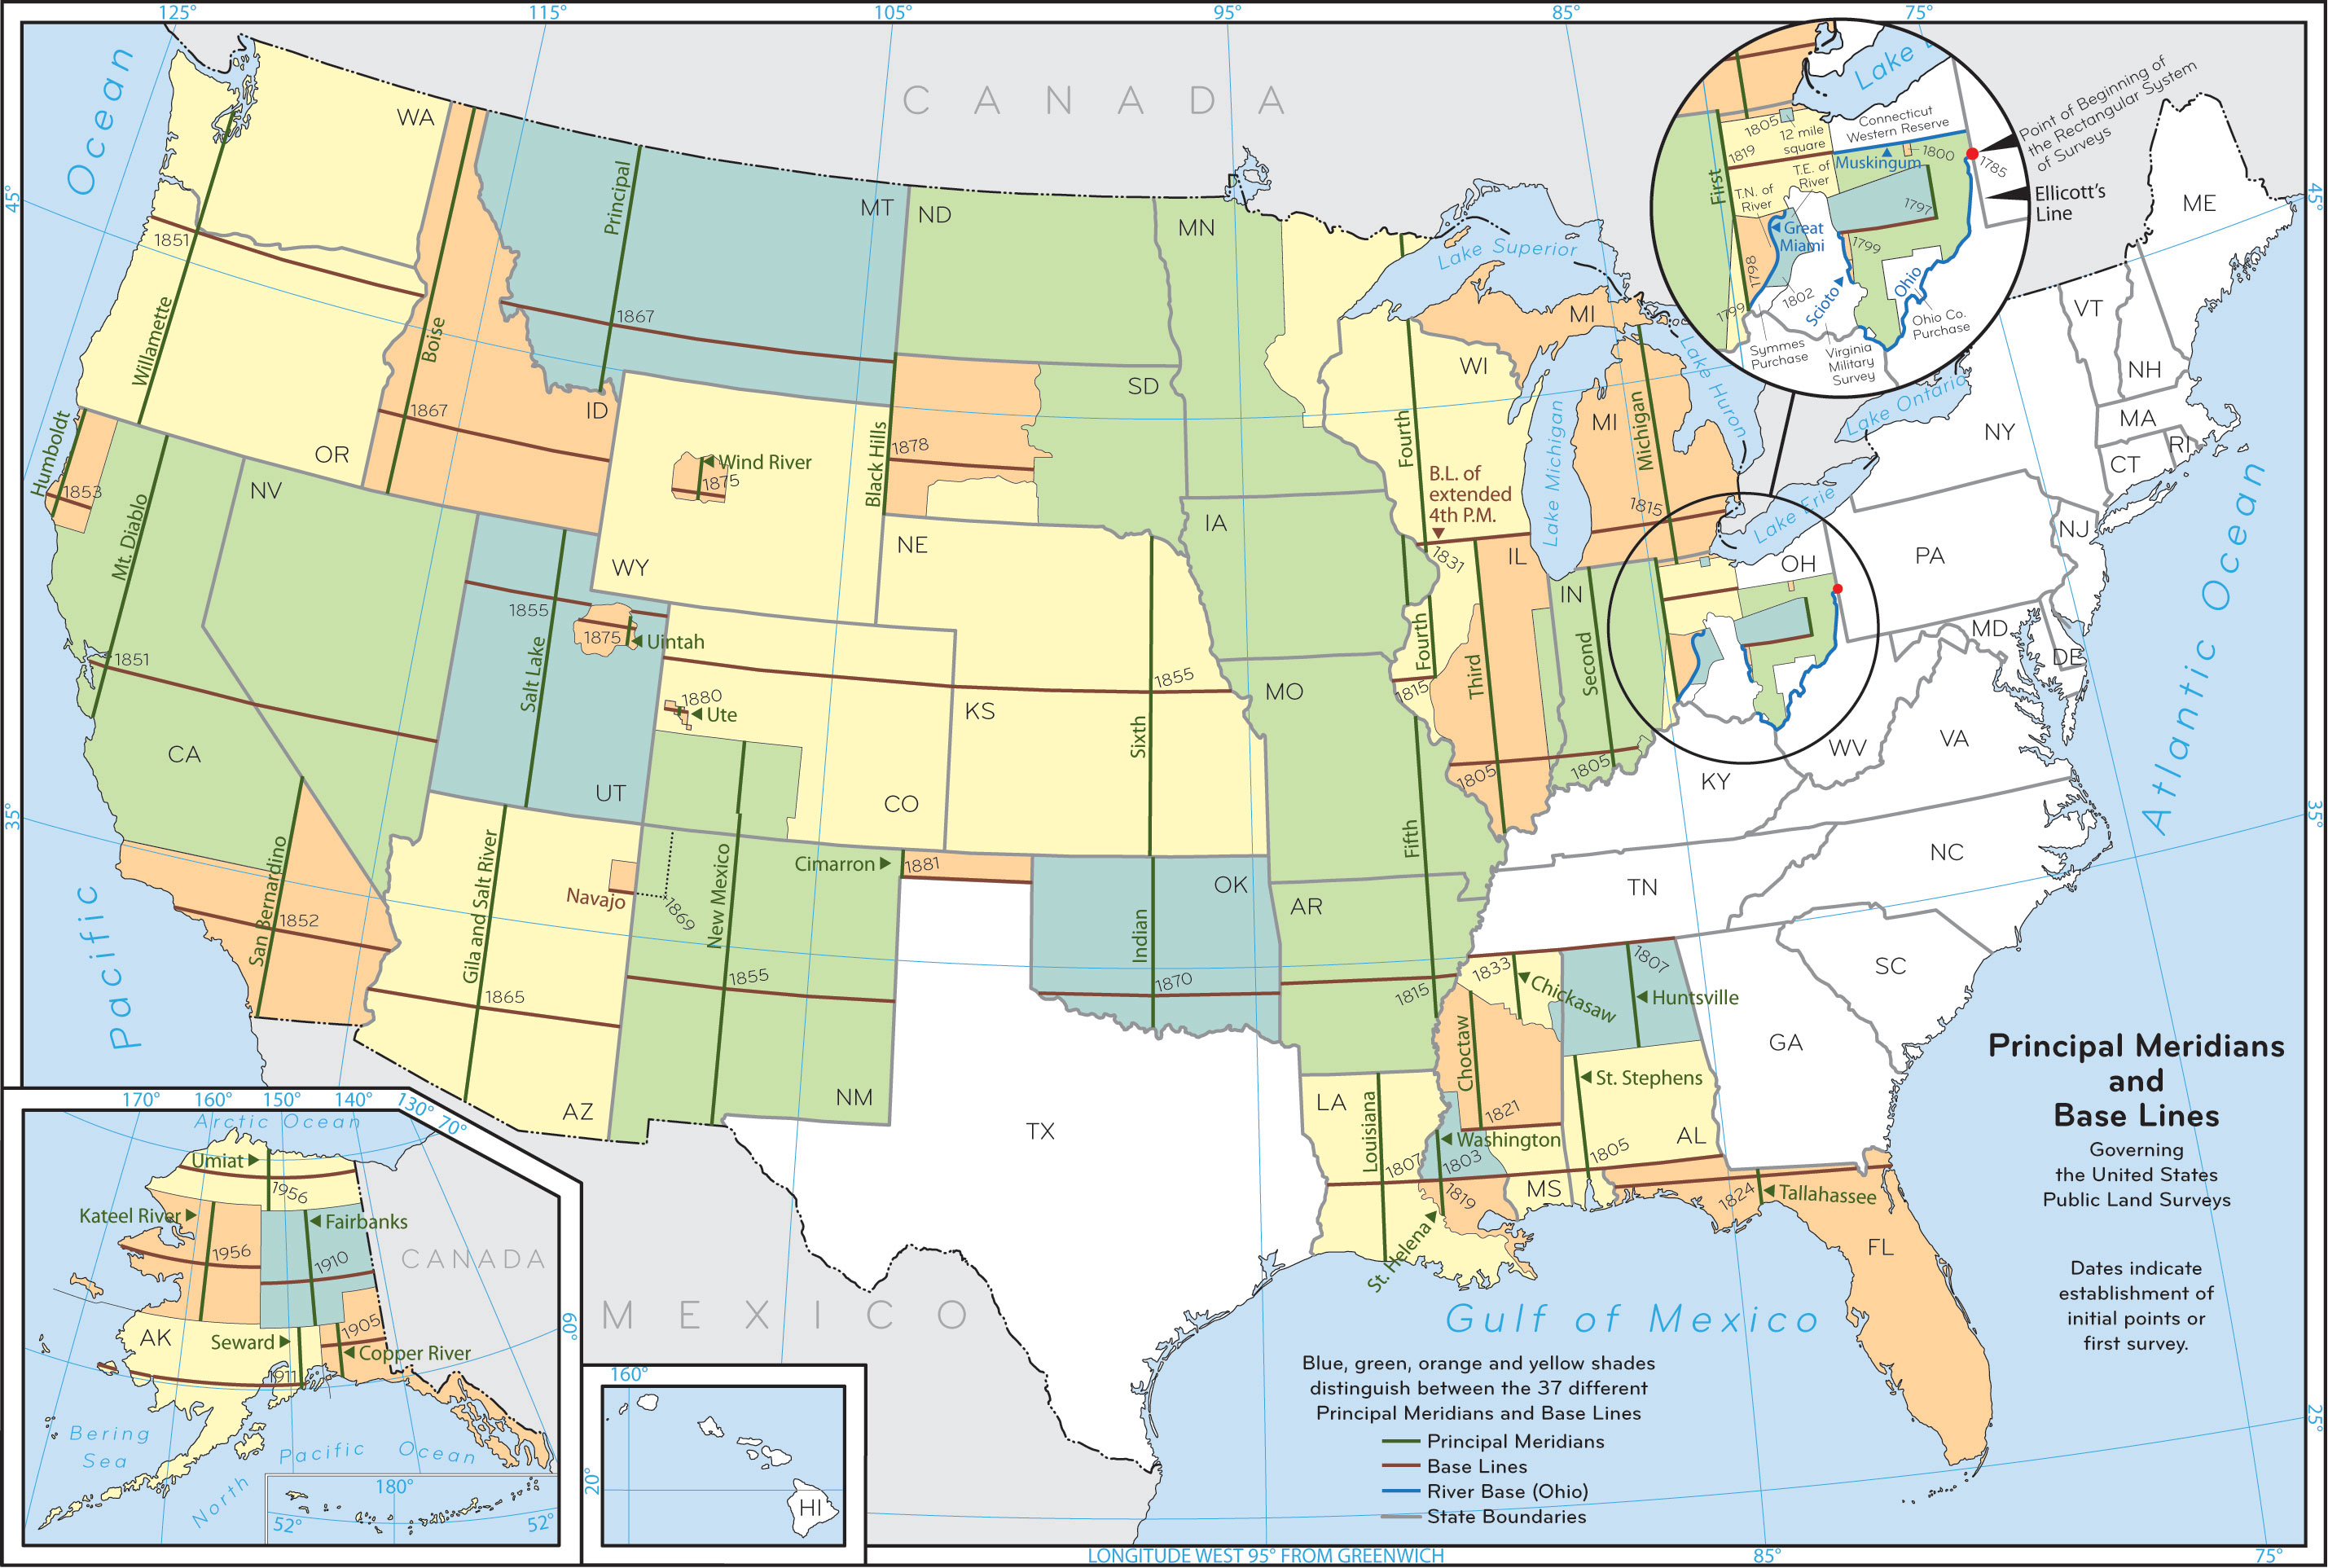 US Public Land Survey System - Principal Meridians and Base Lines